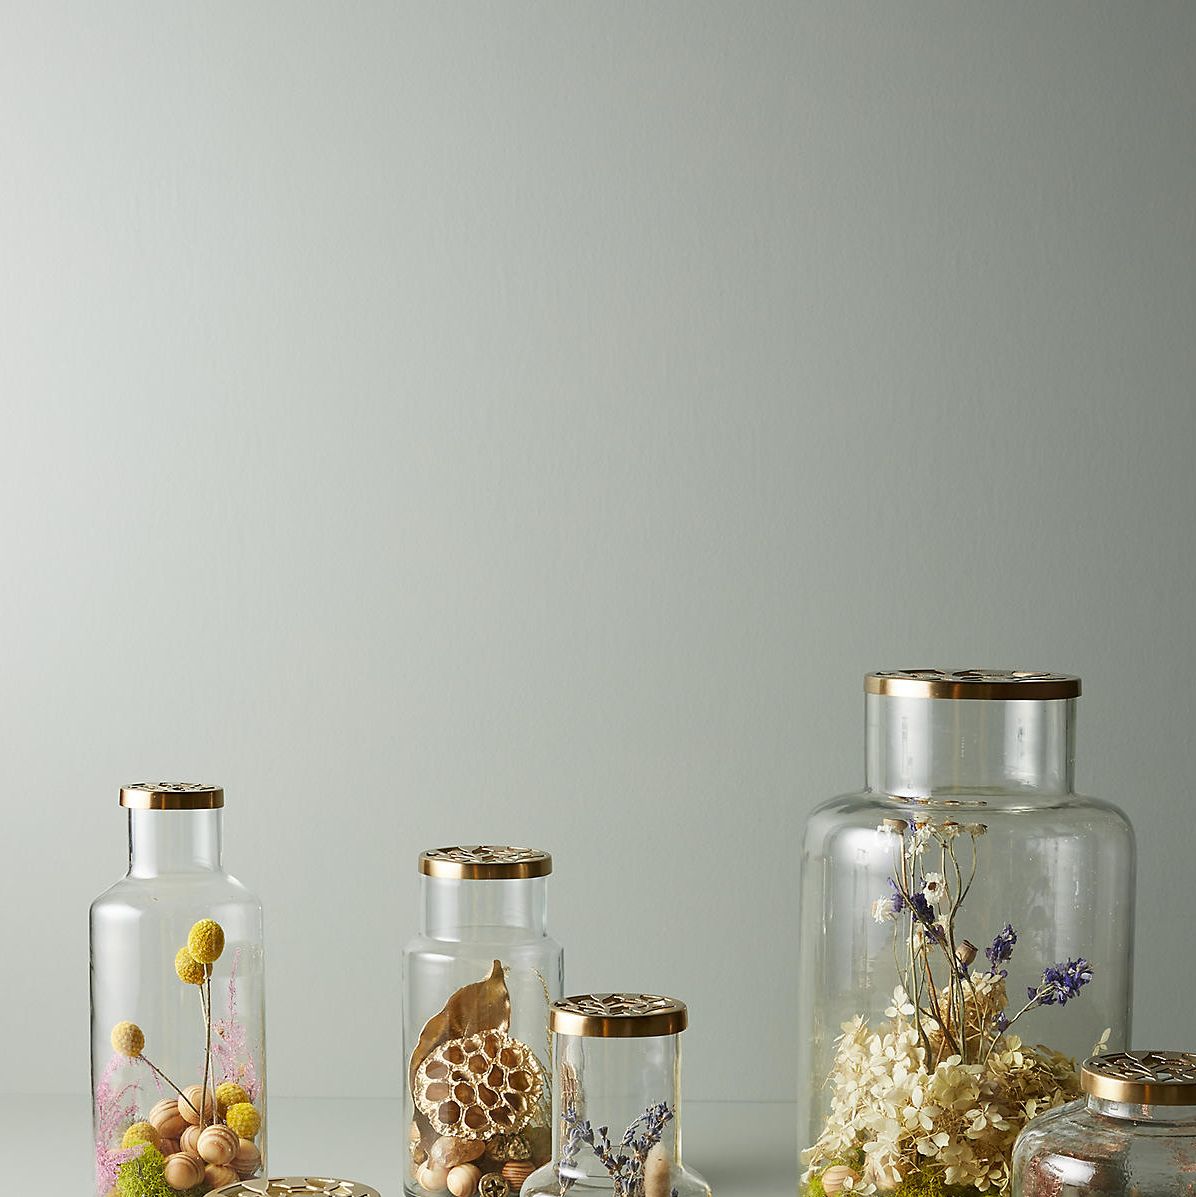 Decorar con flores secas: 3 ideas para este otoño - IKEA